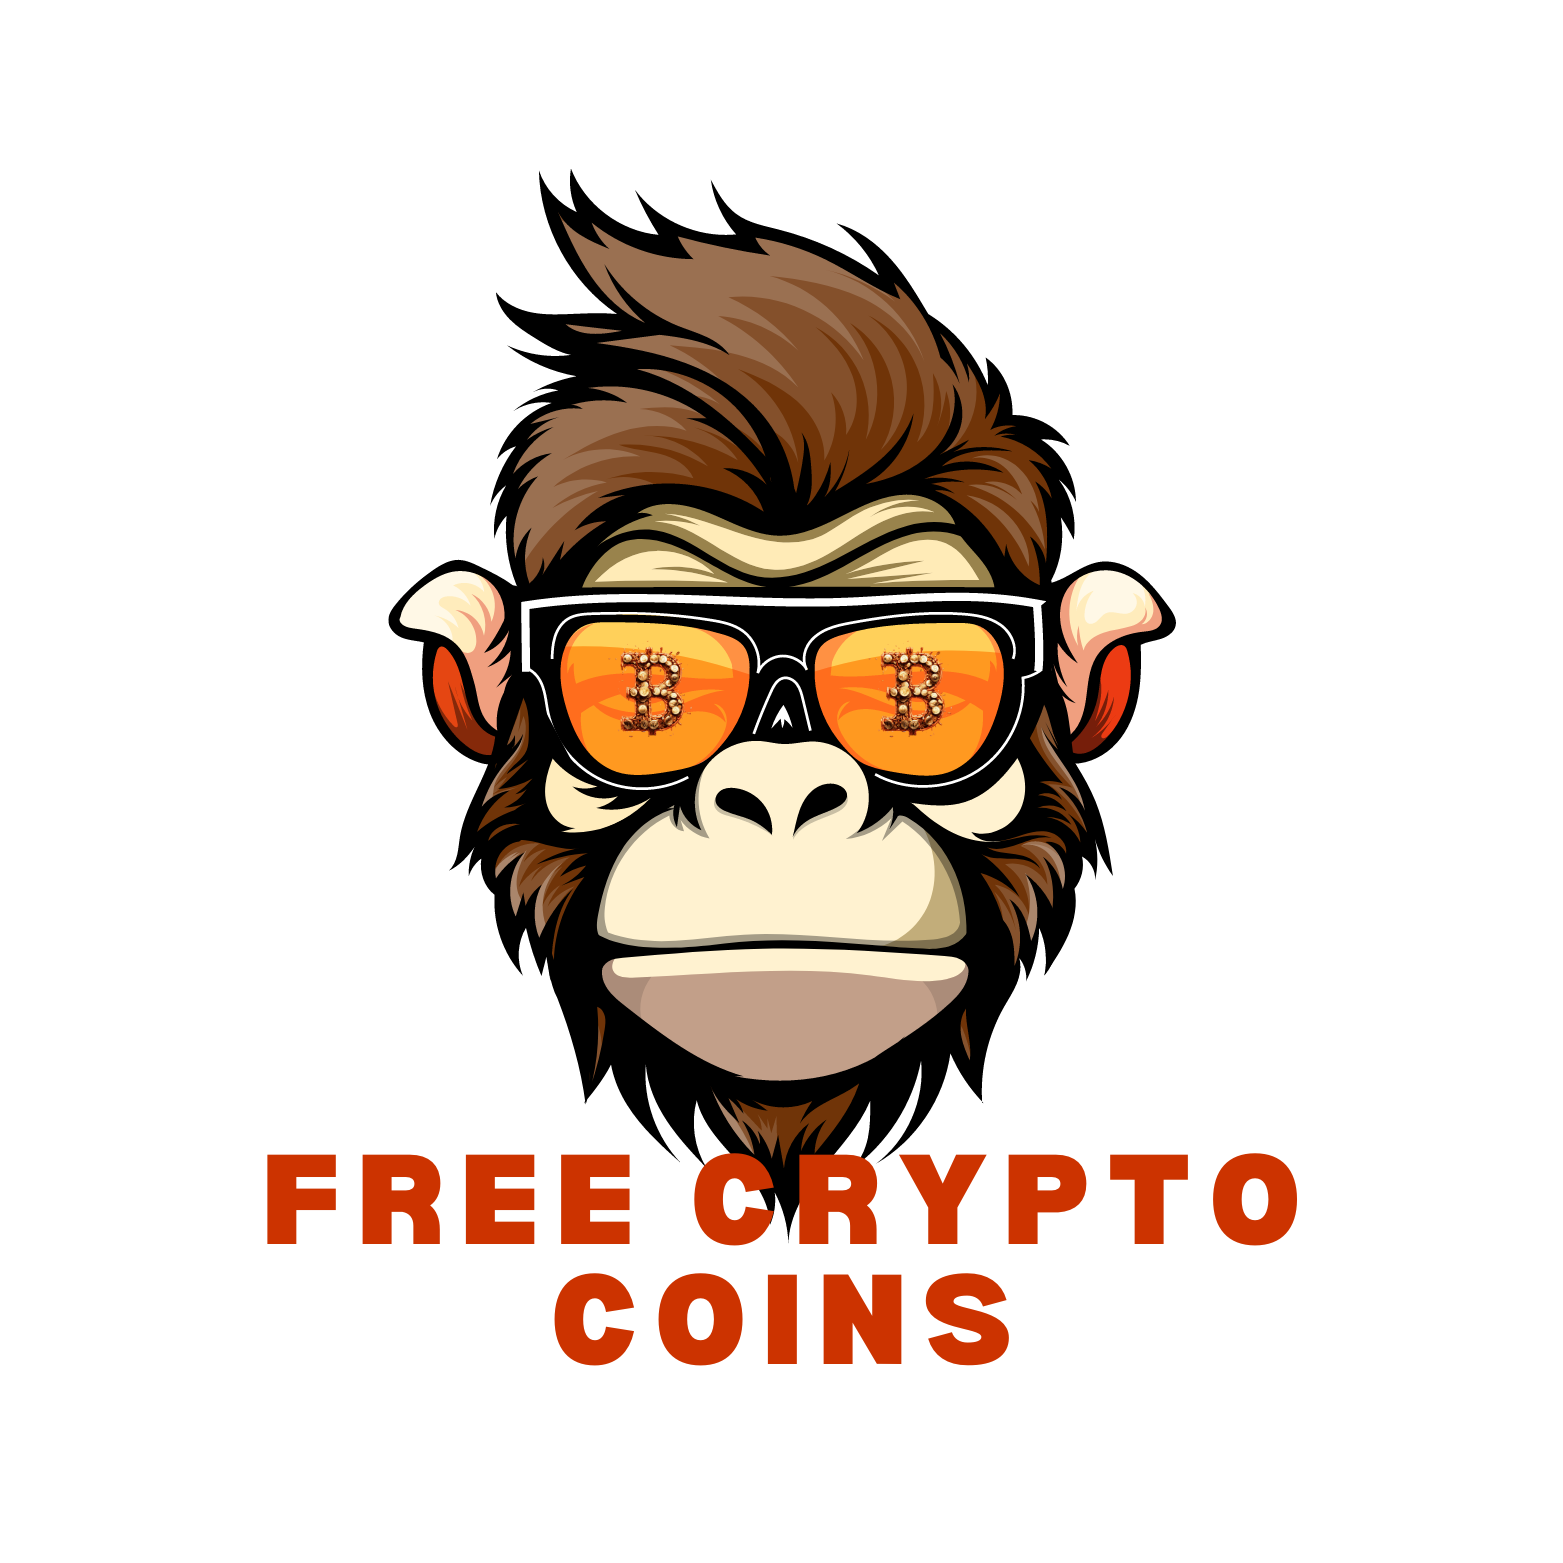 Free Crypto Coins